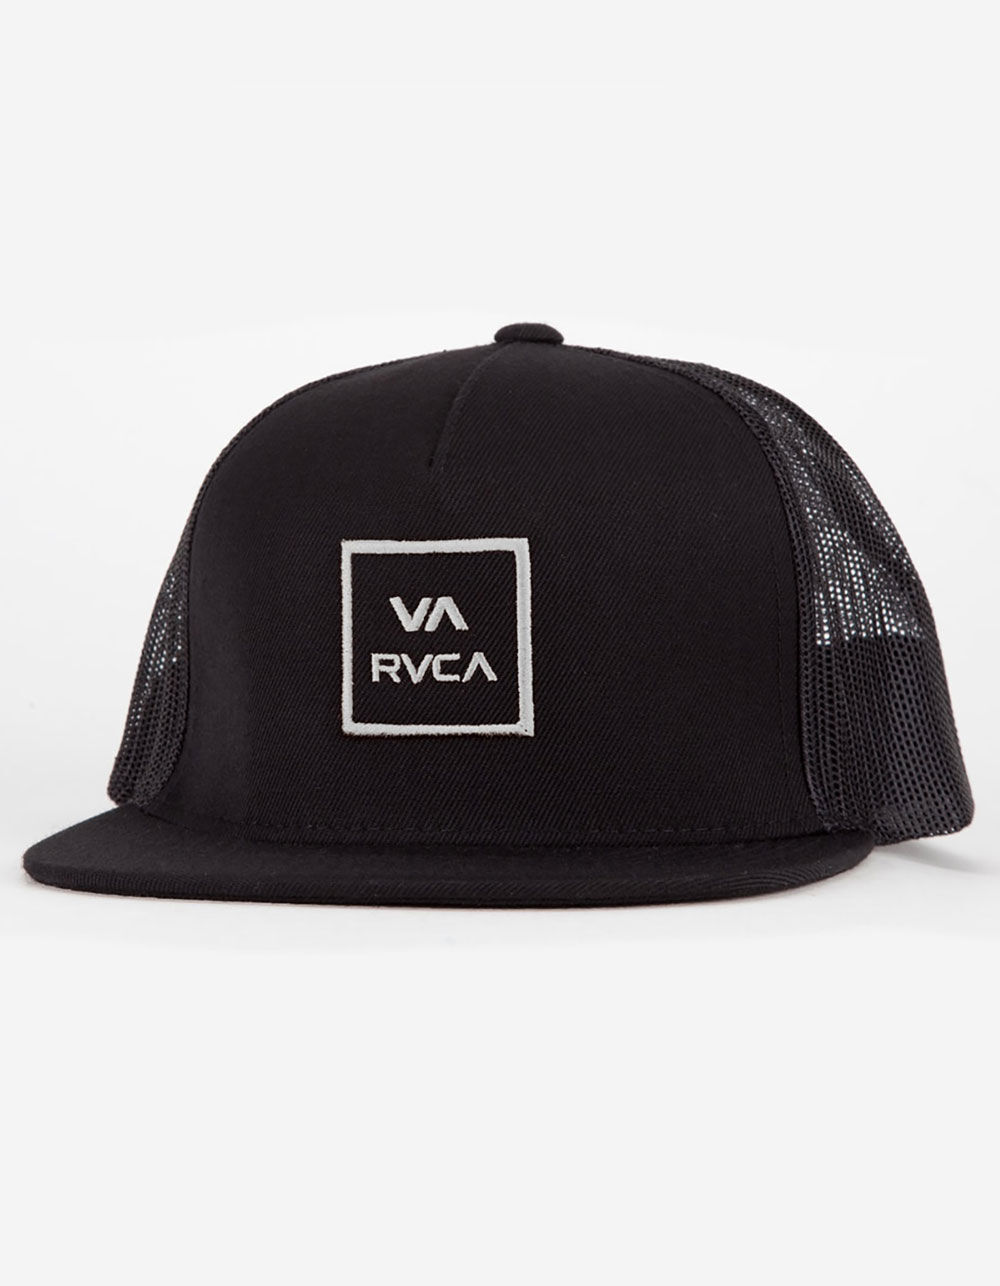 RVCA All The Way Mens Trucker Hat